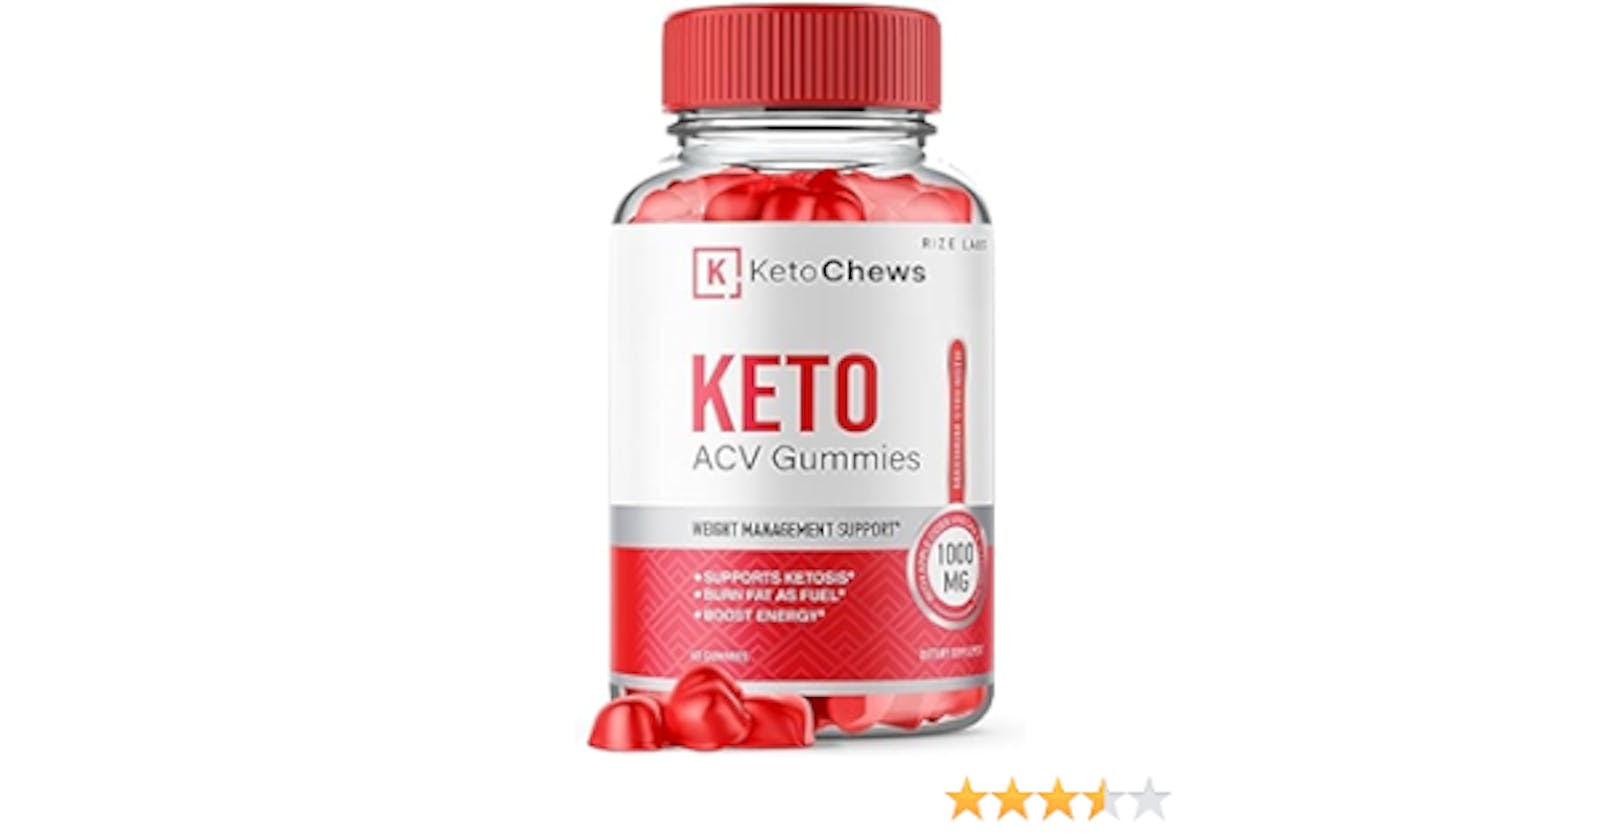 Keto Chews ACV Gummies Reviews: Scam or Legit?